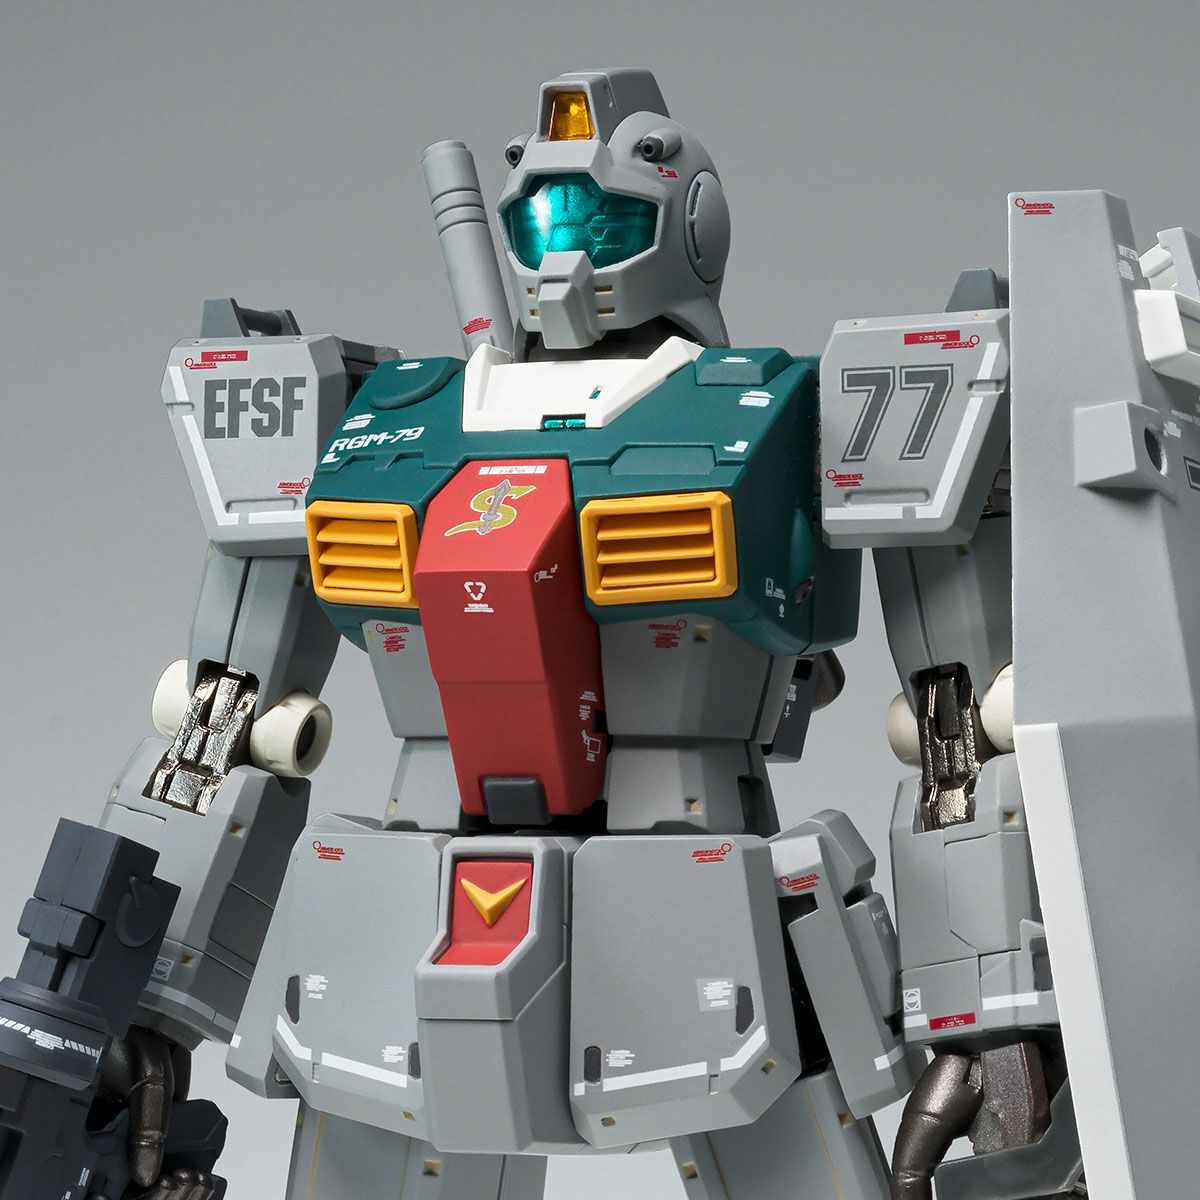 Gundam Fix Figuration Metal Composite RGM-79 Sleggar Law’s Gundam type Mass-production model(Cucuruz Doan’s Island)